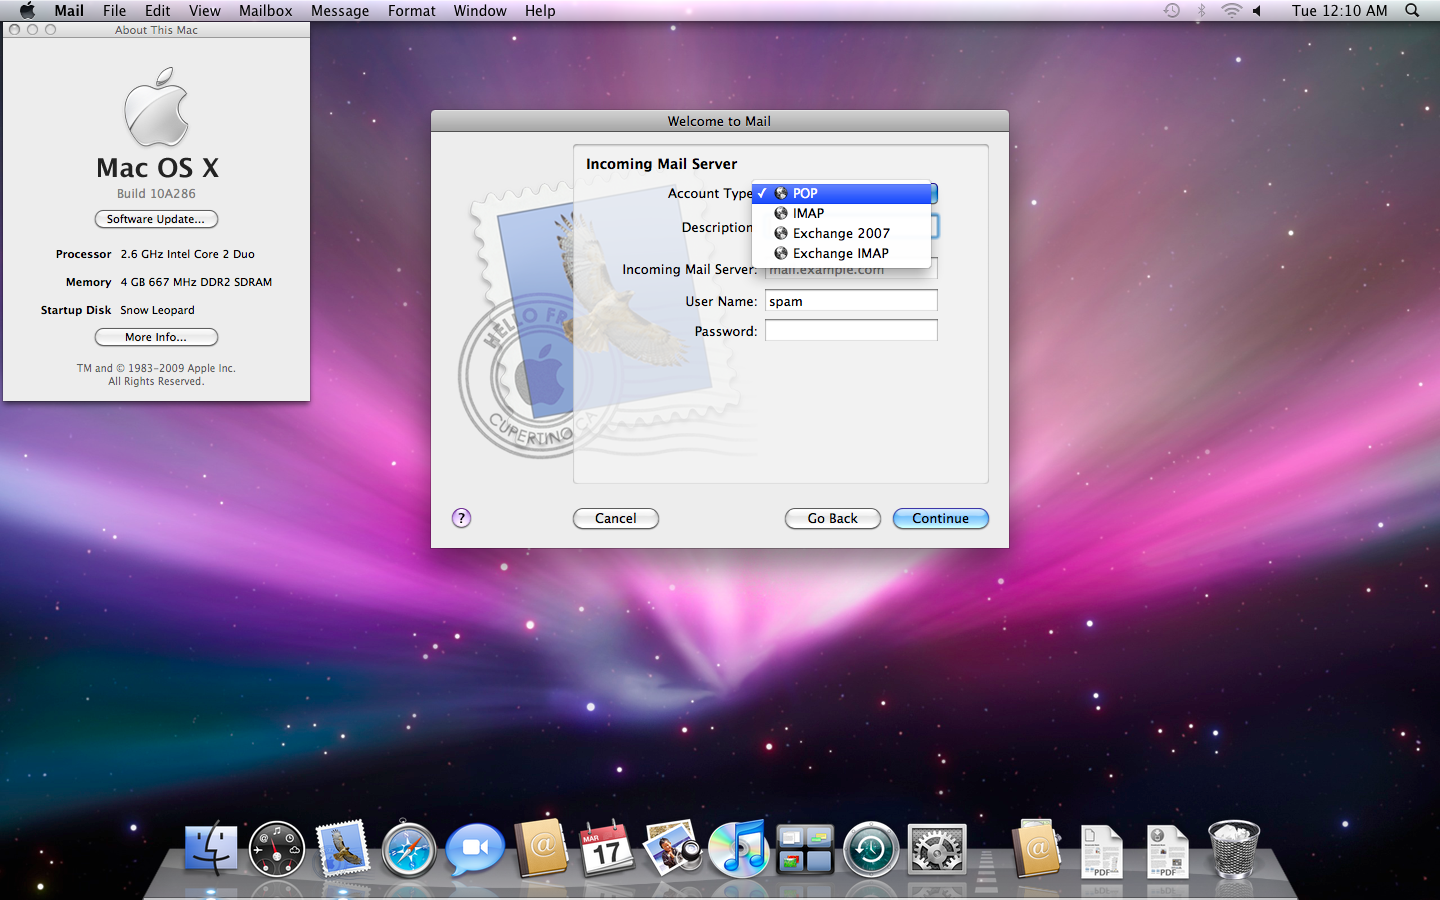 Snow leopard download mac